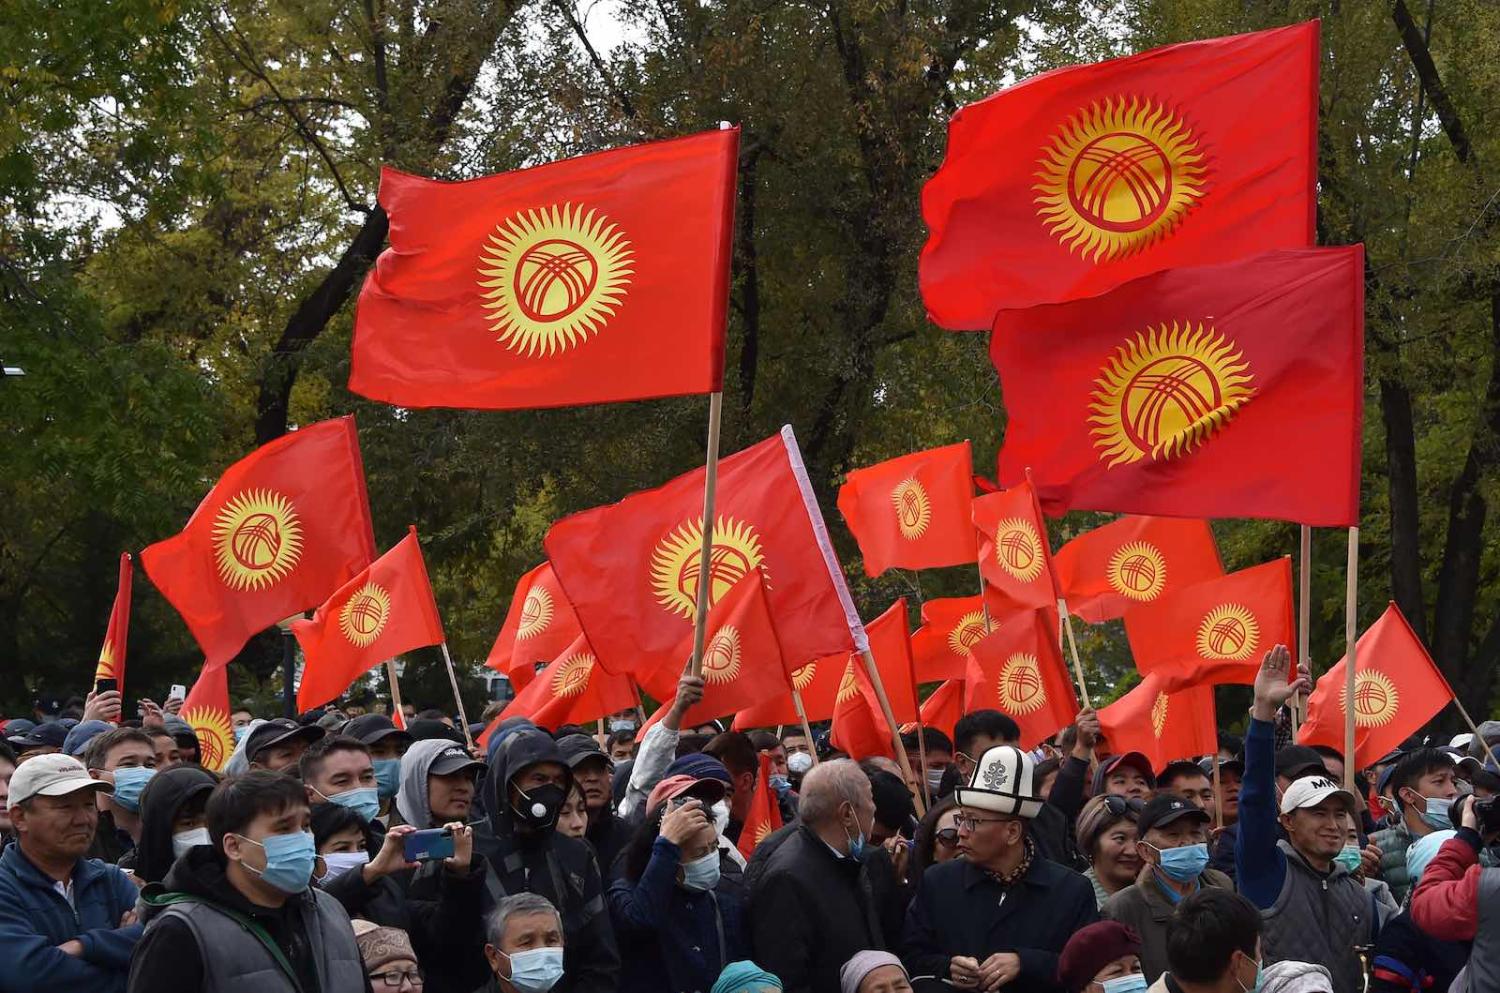 Supporters of former Kyrgyzstan President Almazbek Atambayev attend a rally in Bishkek, 9 October 2020 (Vyacheslav Oseledko/AFP via Getty Images)